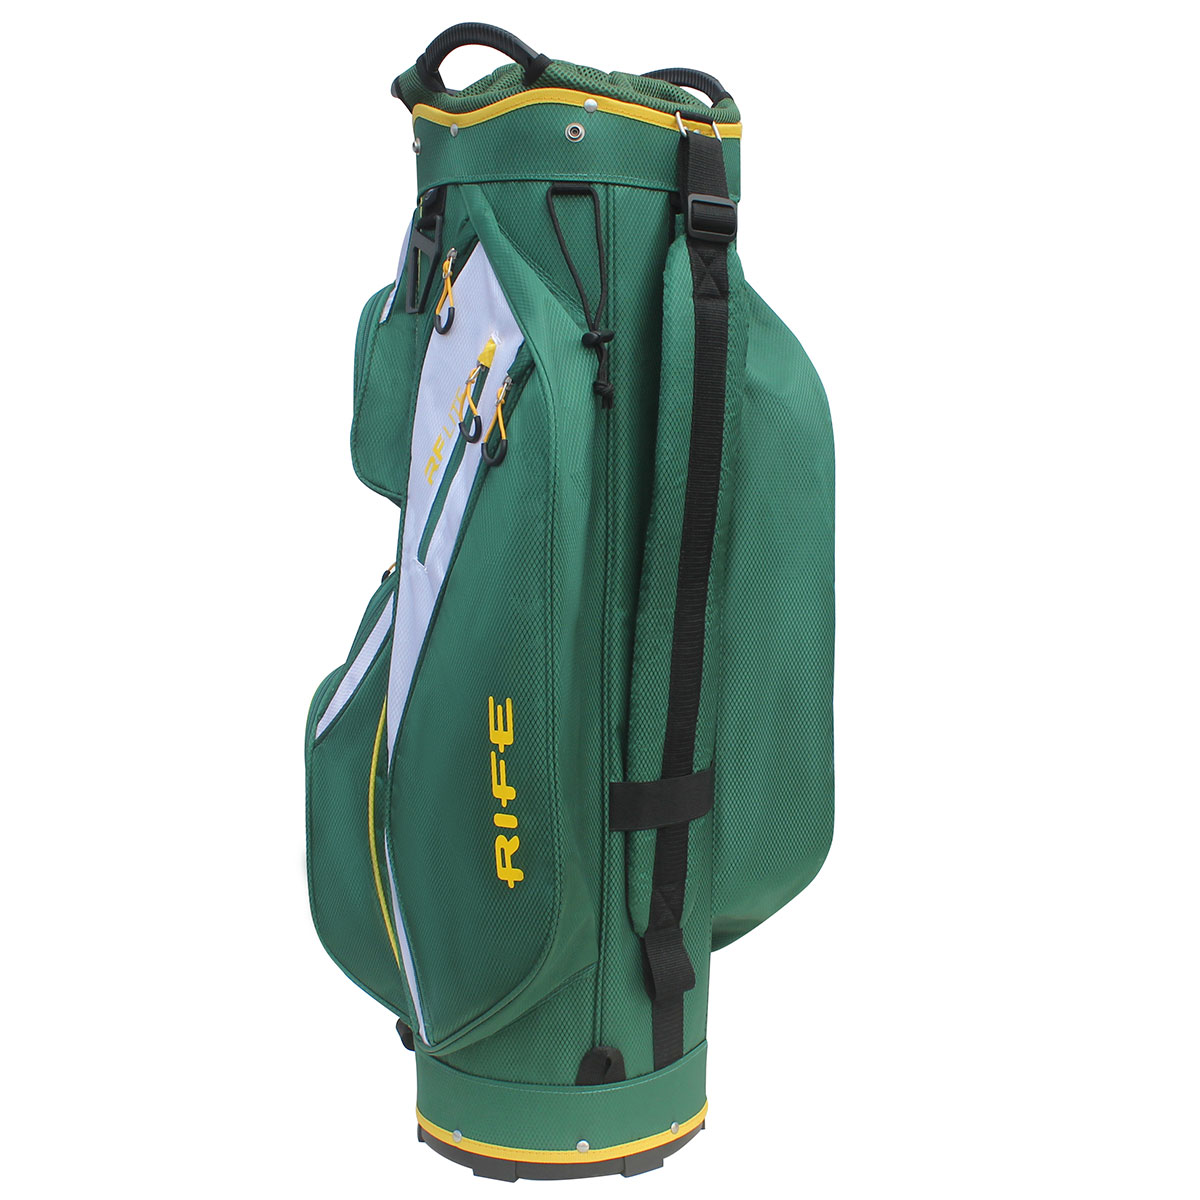 Rife RF LITE Tournament Edition Golf Cart Bag from american golf